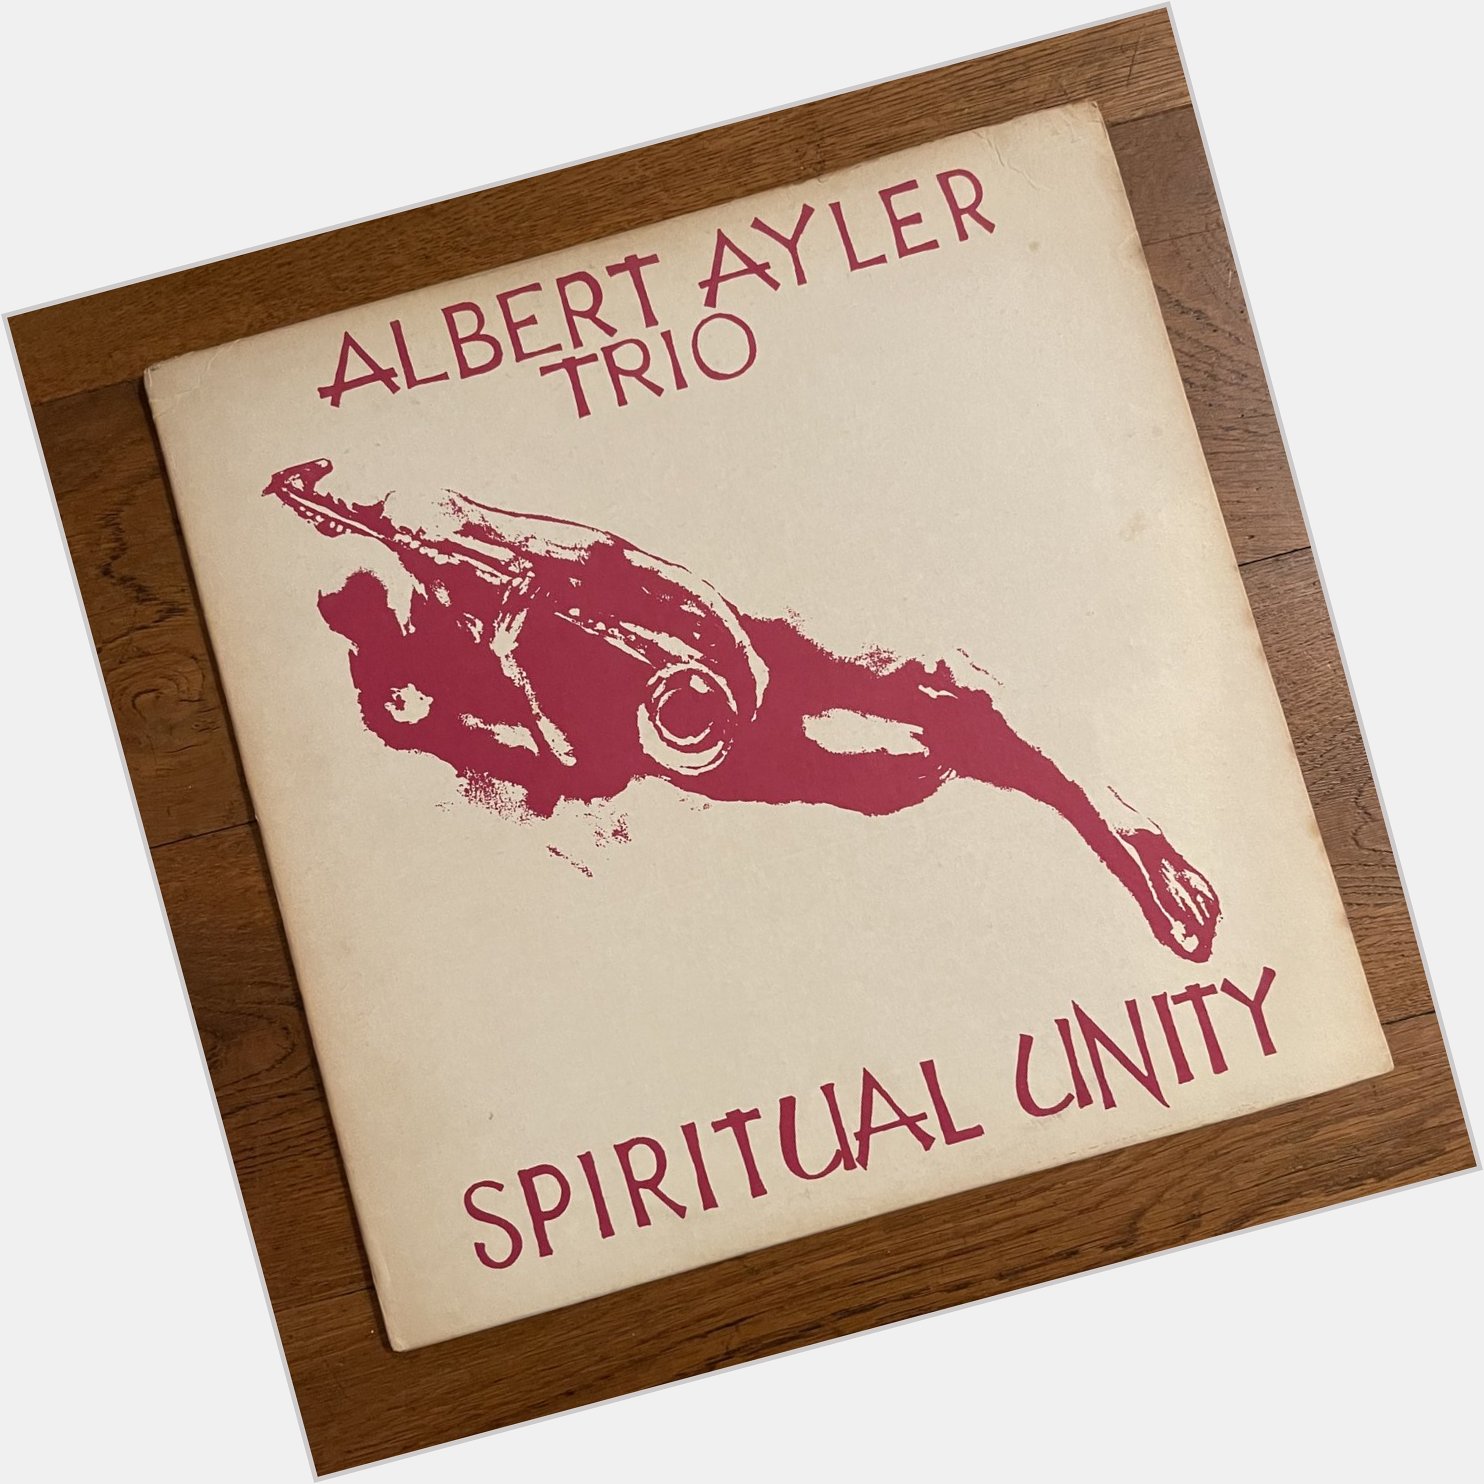 Happy birthday Albert Ayler 